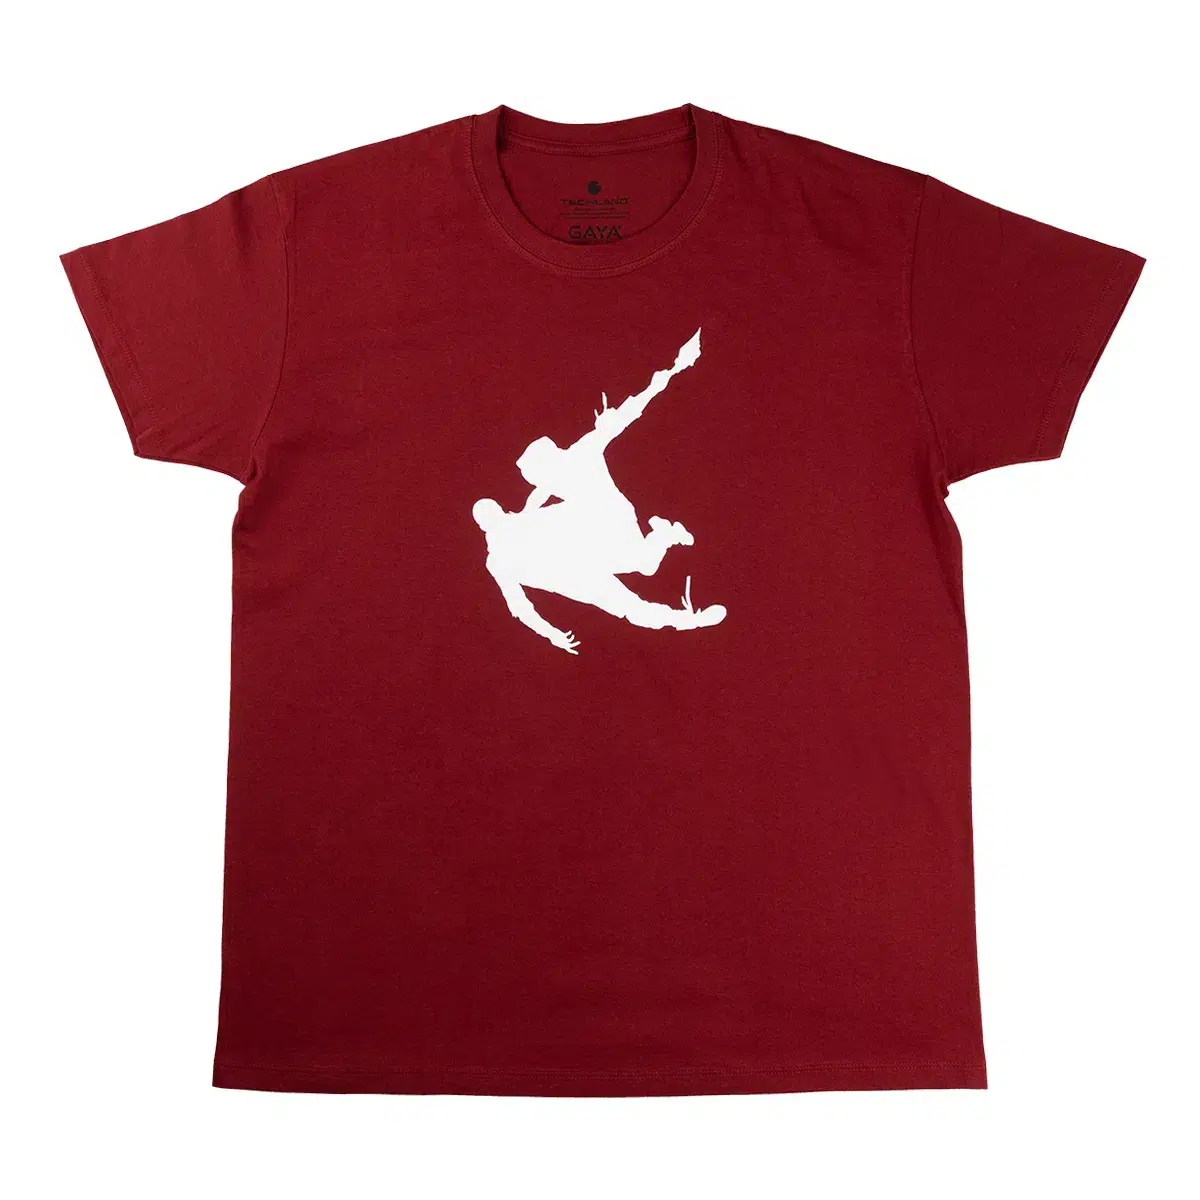 Dying Light 2 T-Shirt "Caldwell" Red XL